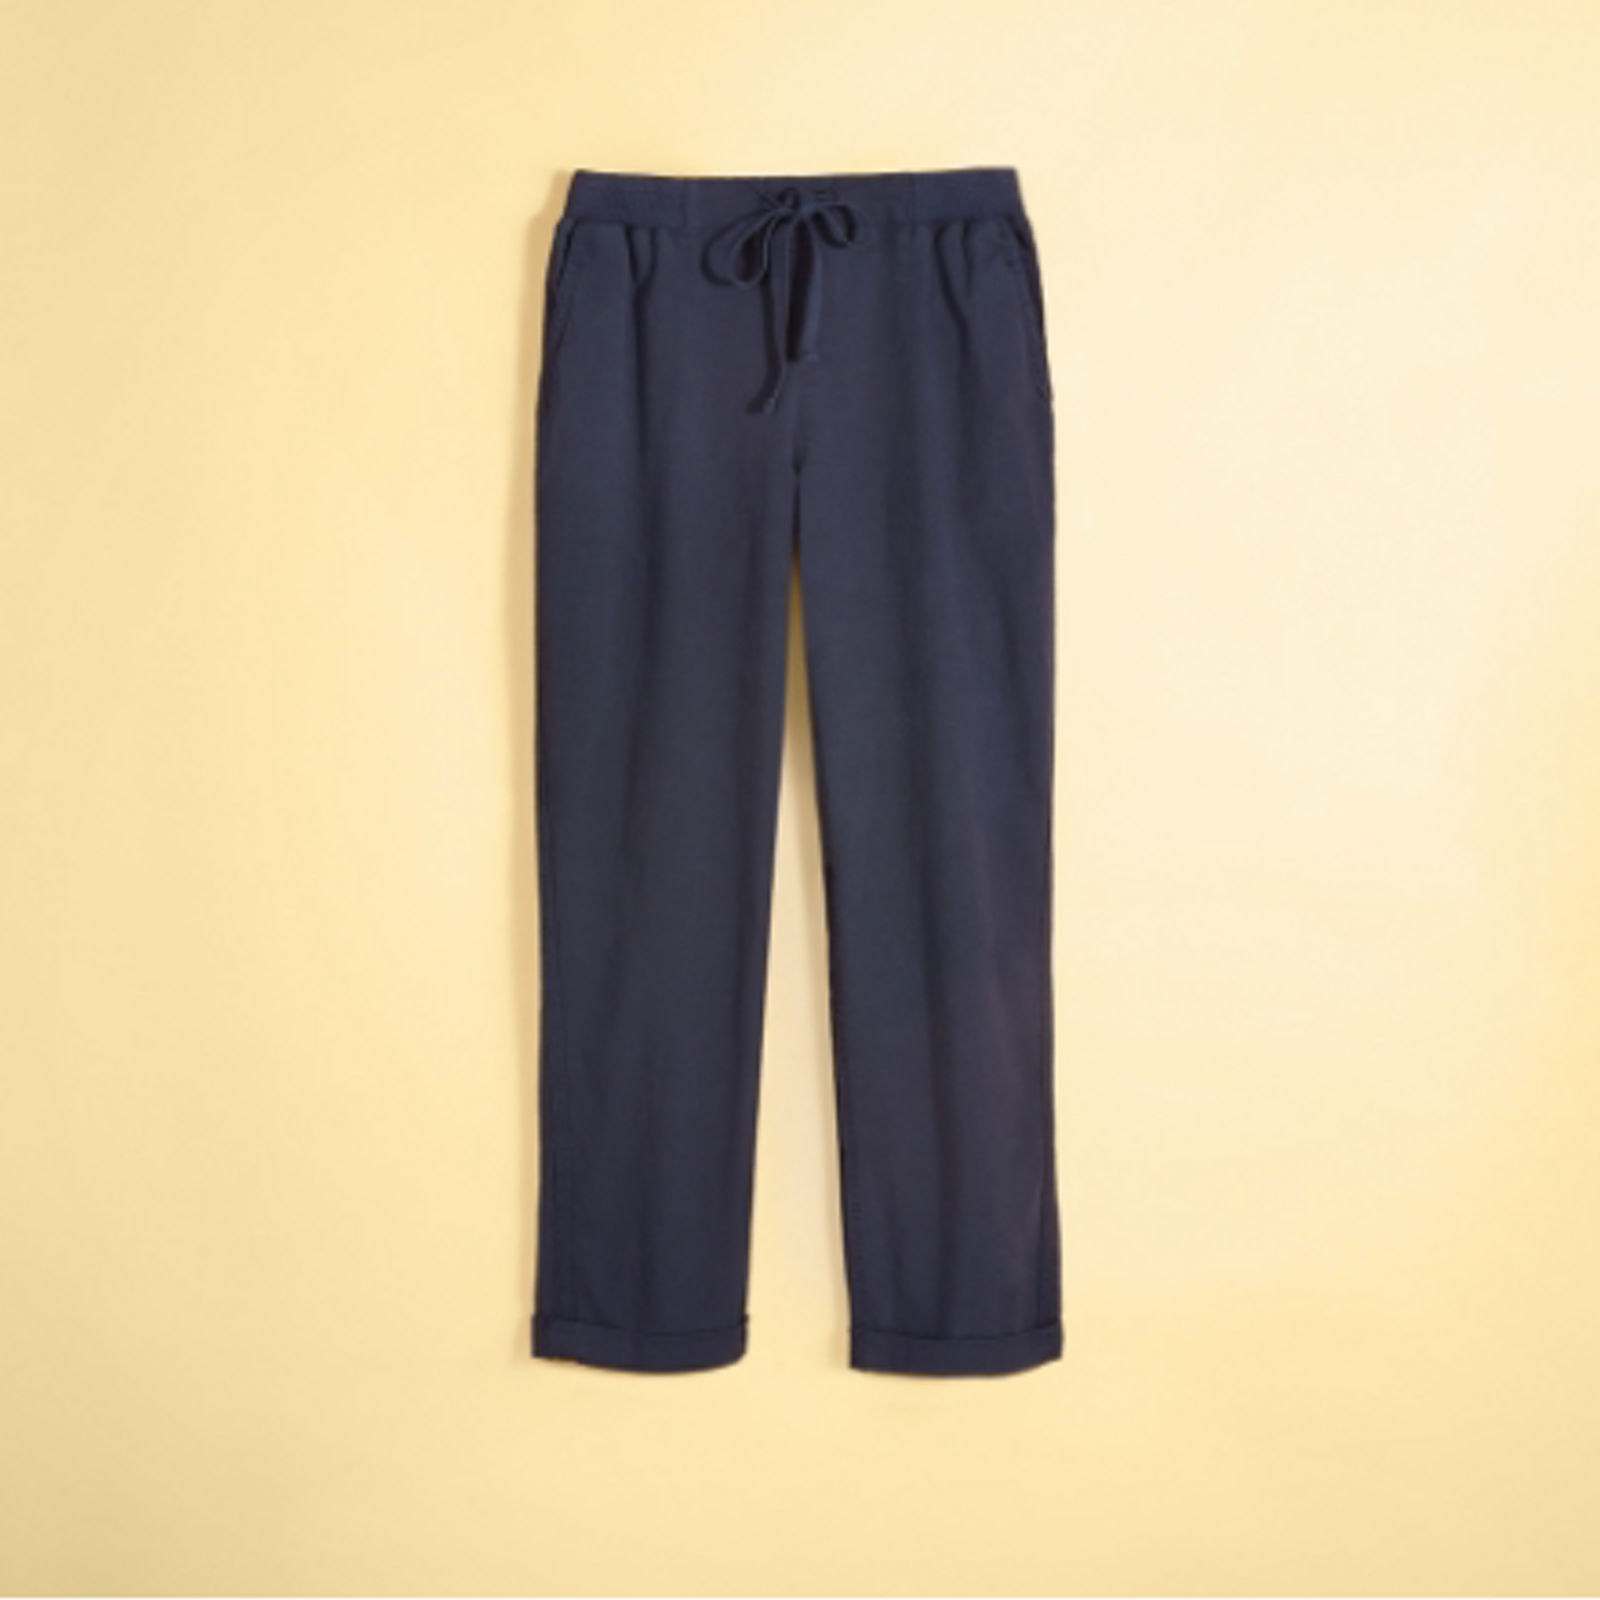 Style & Co Petite Tie-Hem Utility Capri Pants, Created for Macy's